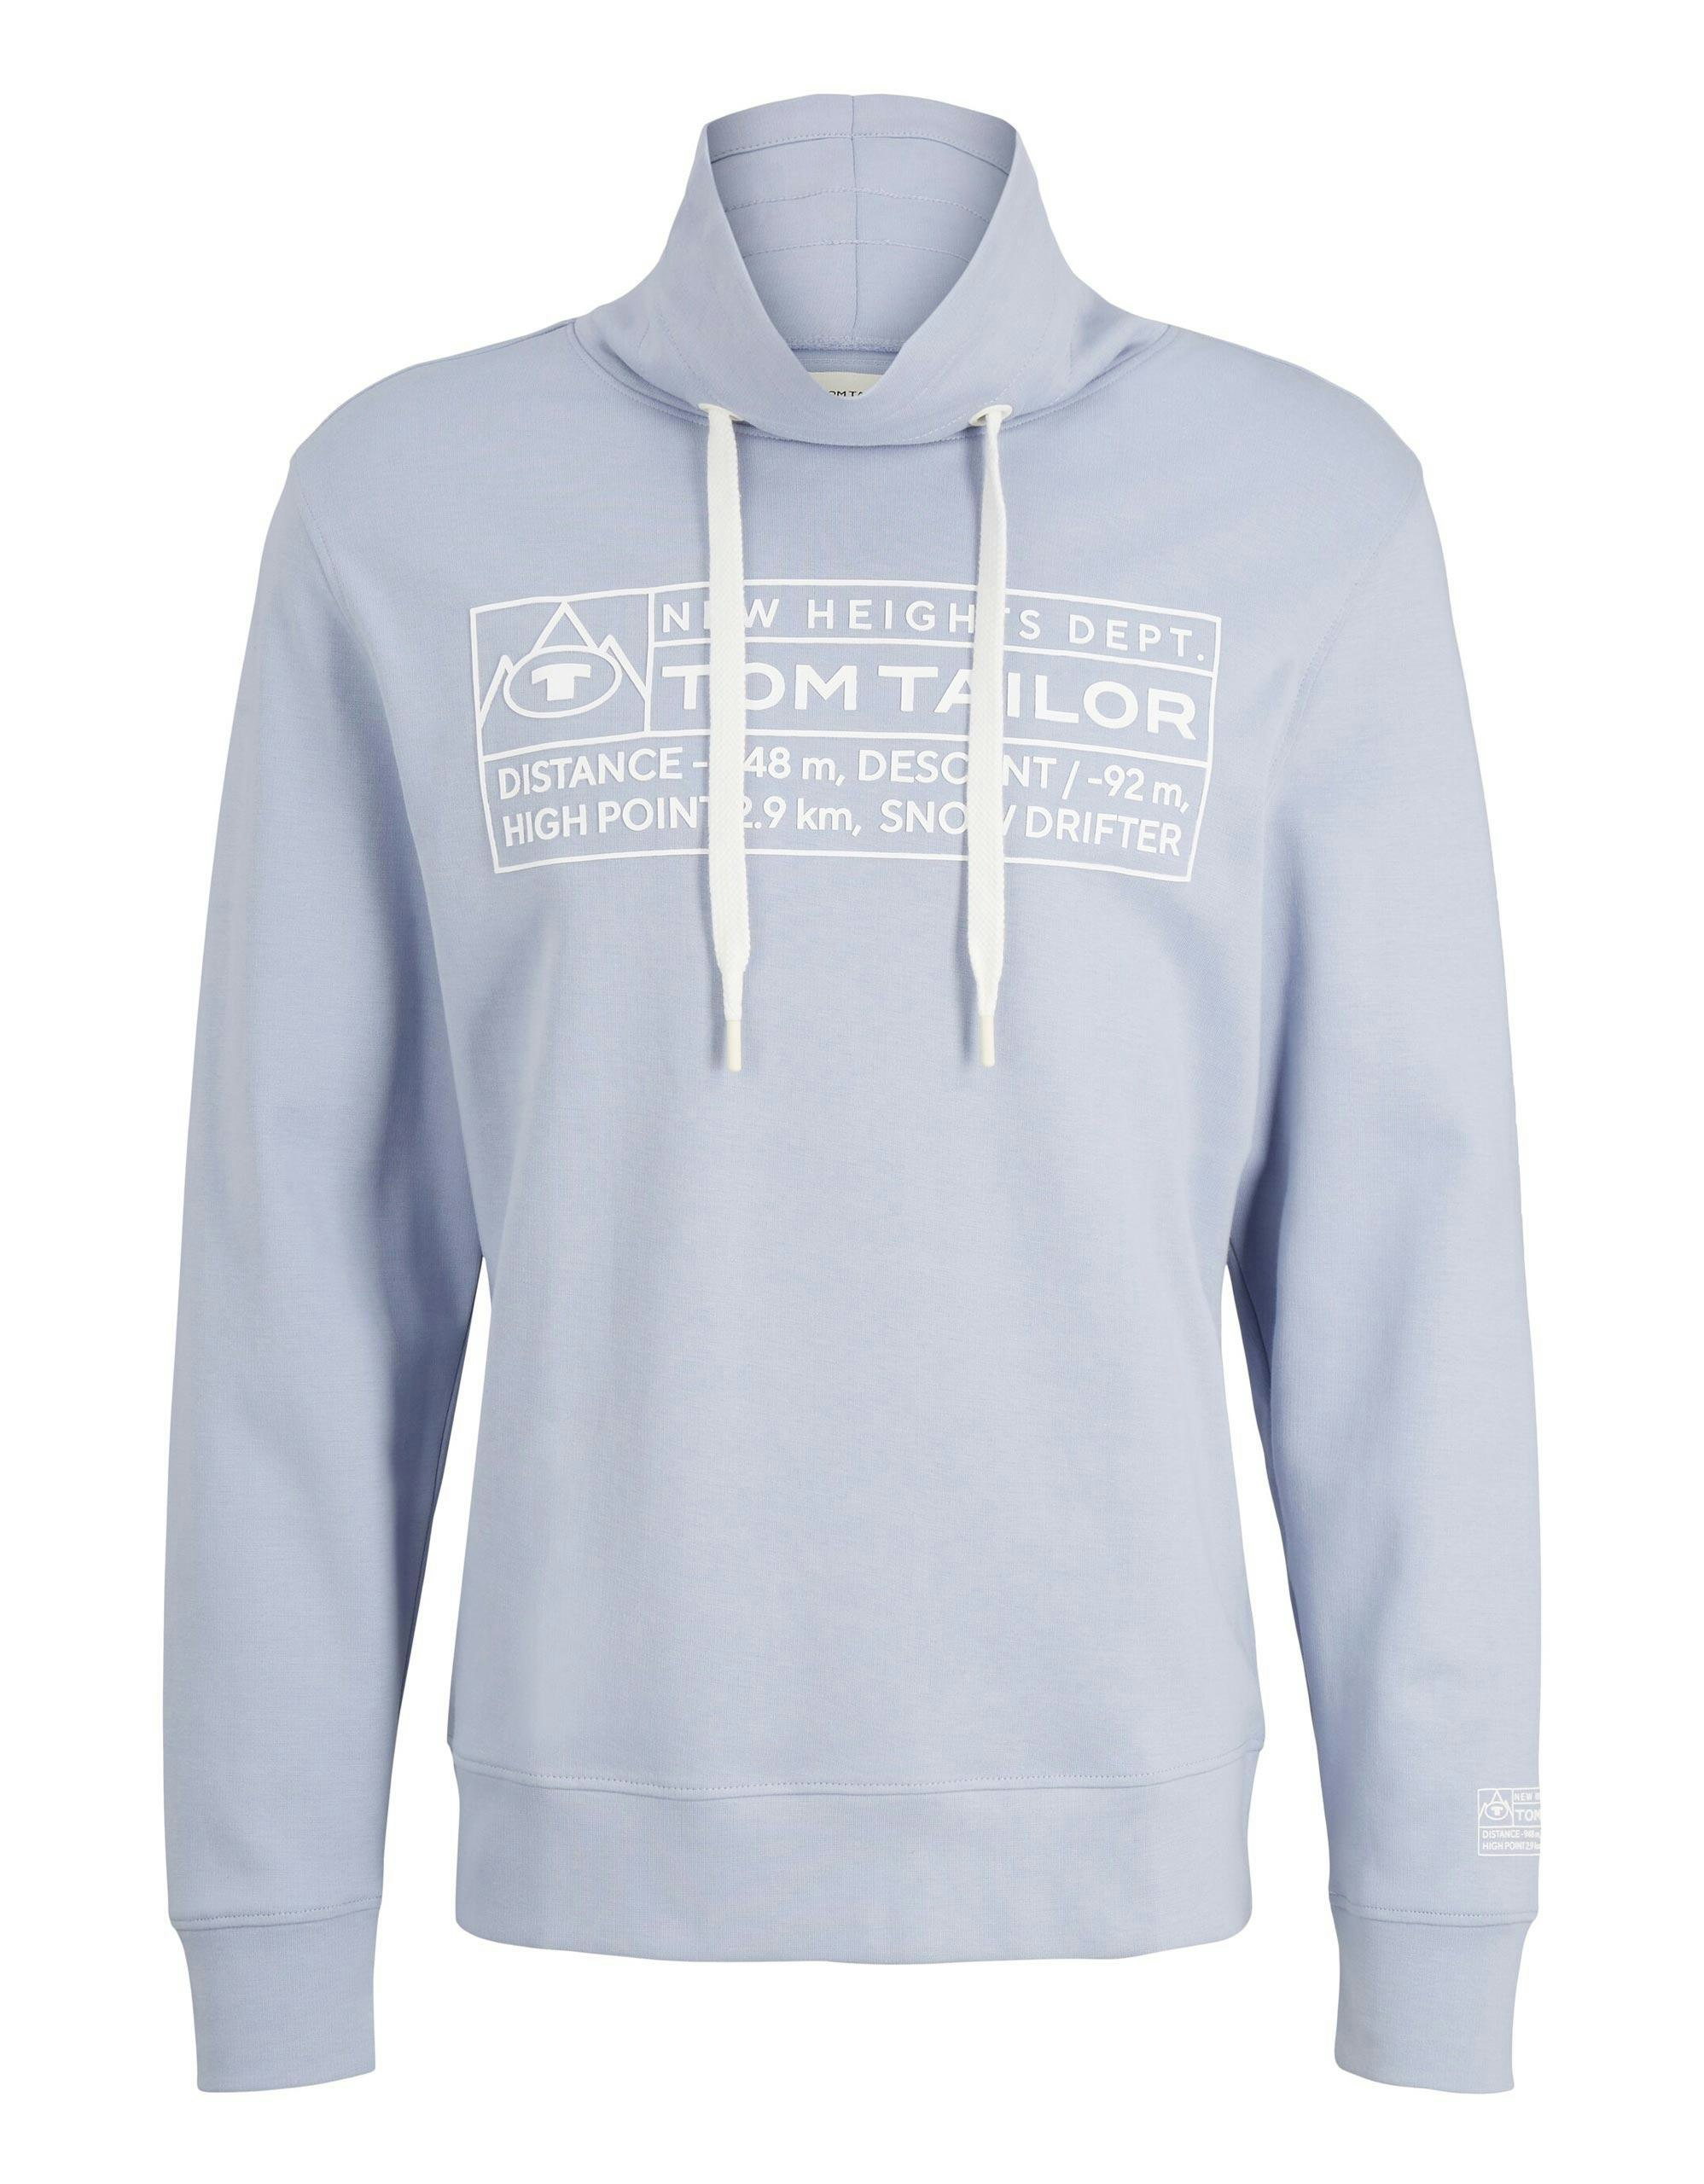 DAMEN Pullovers & Sweatshirts Print Blau S Decathlon sweatshirt Rabatt 87 % 